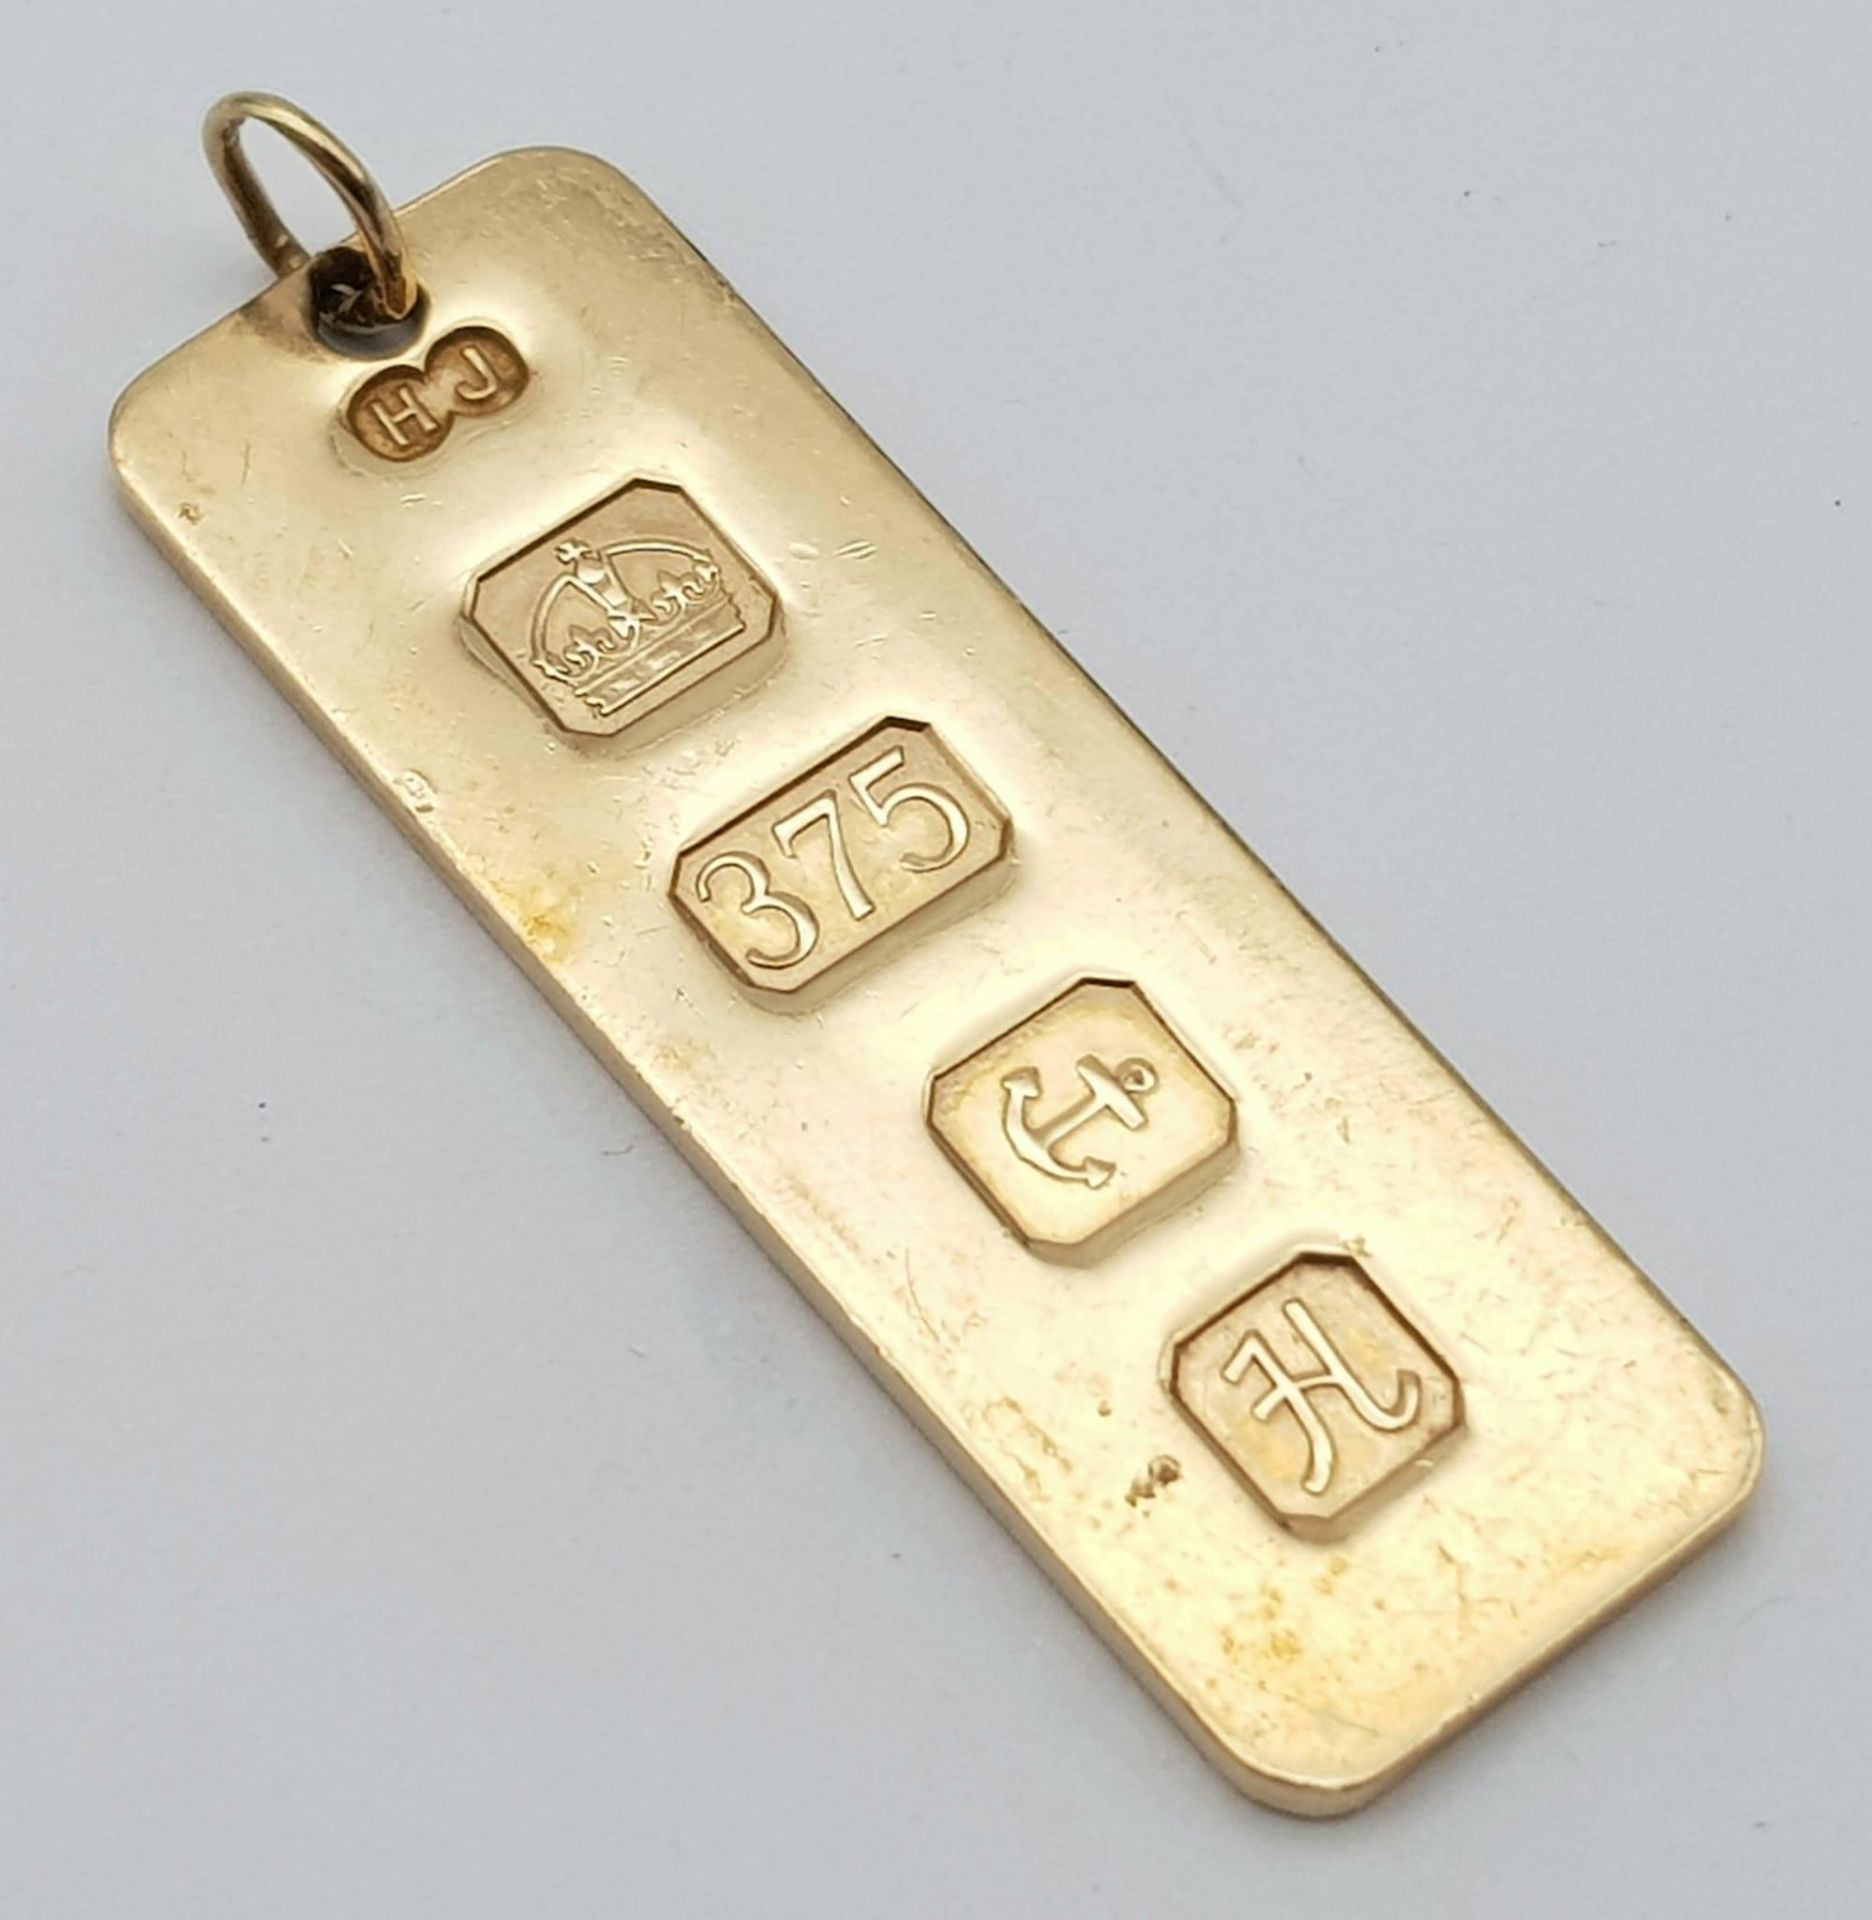 A 9K Yellow Gold Hallmarked Ingot Pendant. 7.8g weight.